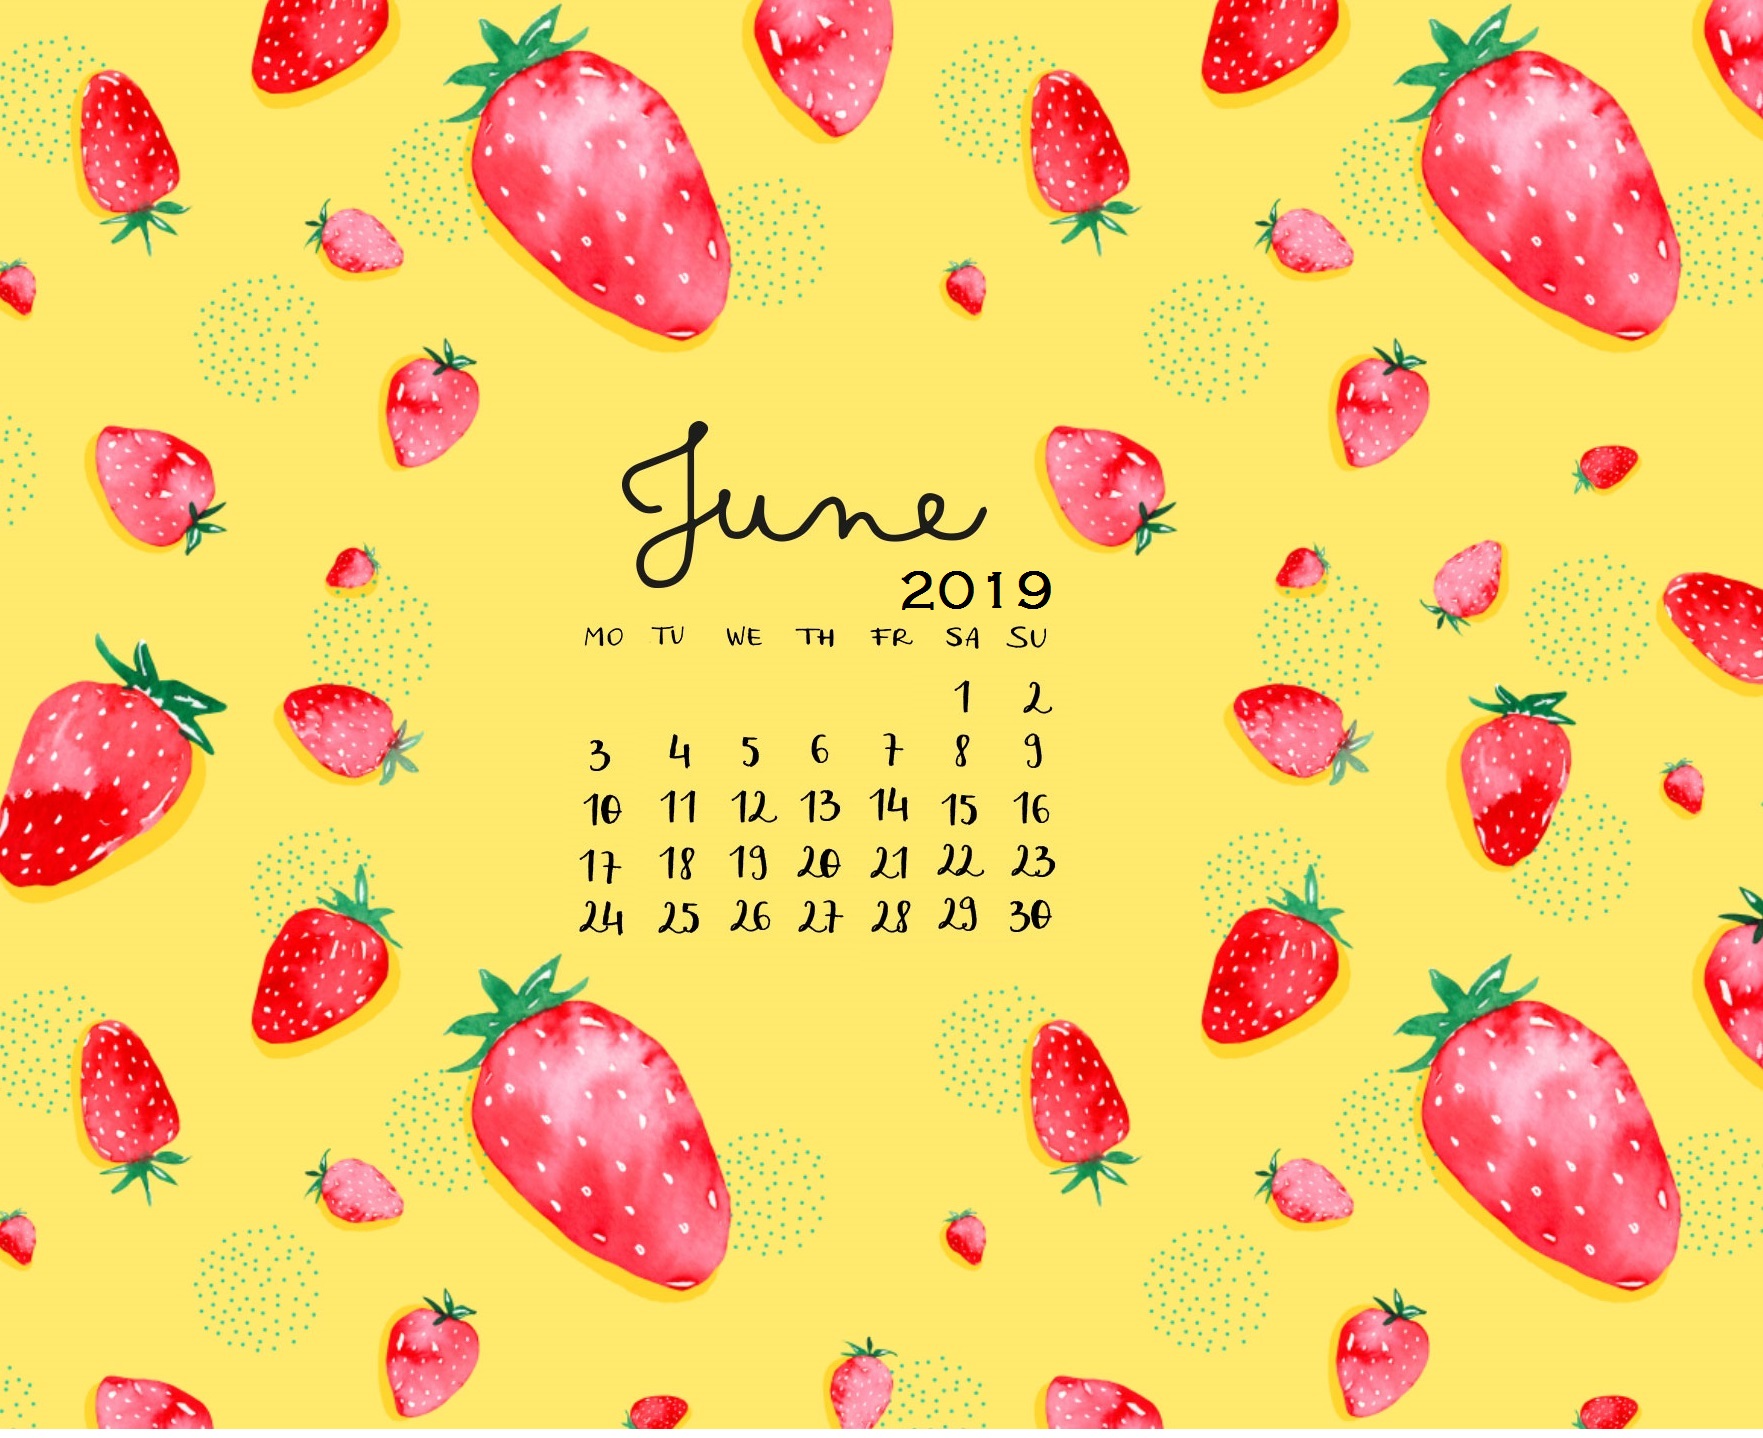 Latest June 2019 Calendar Designs